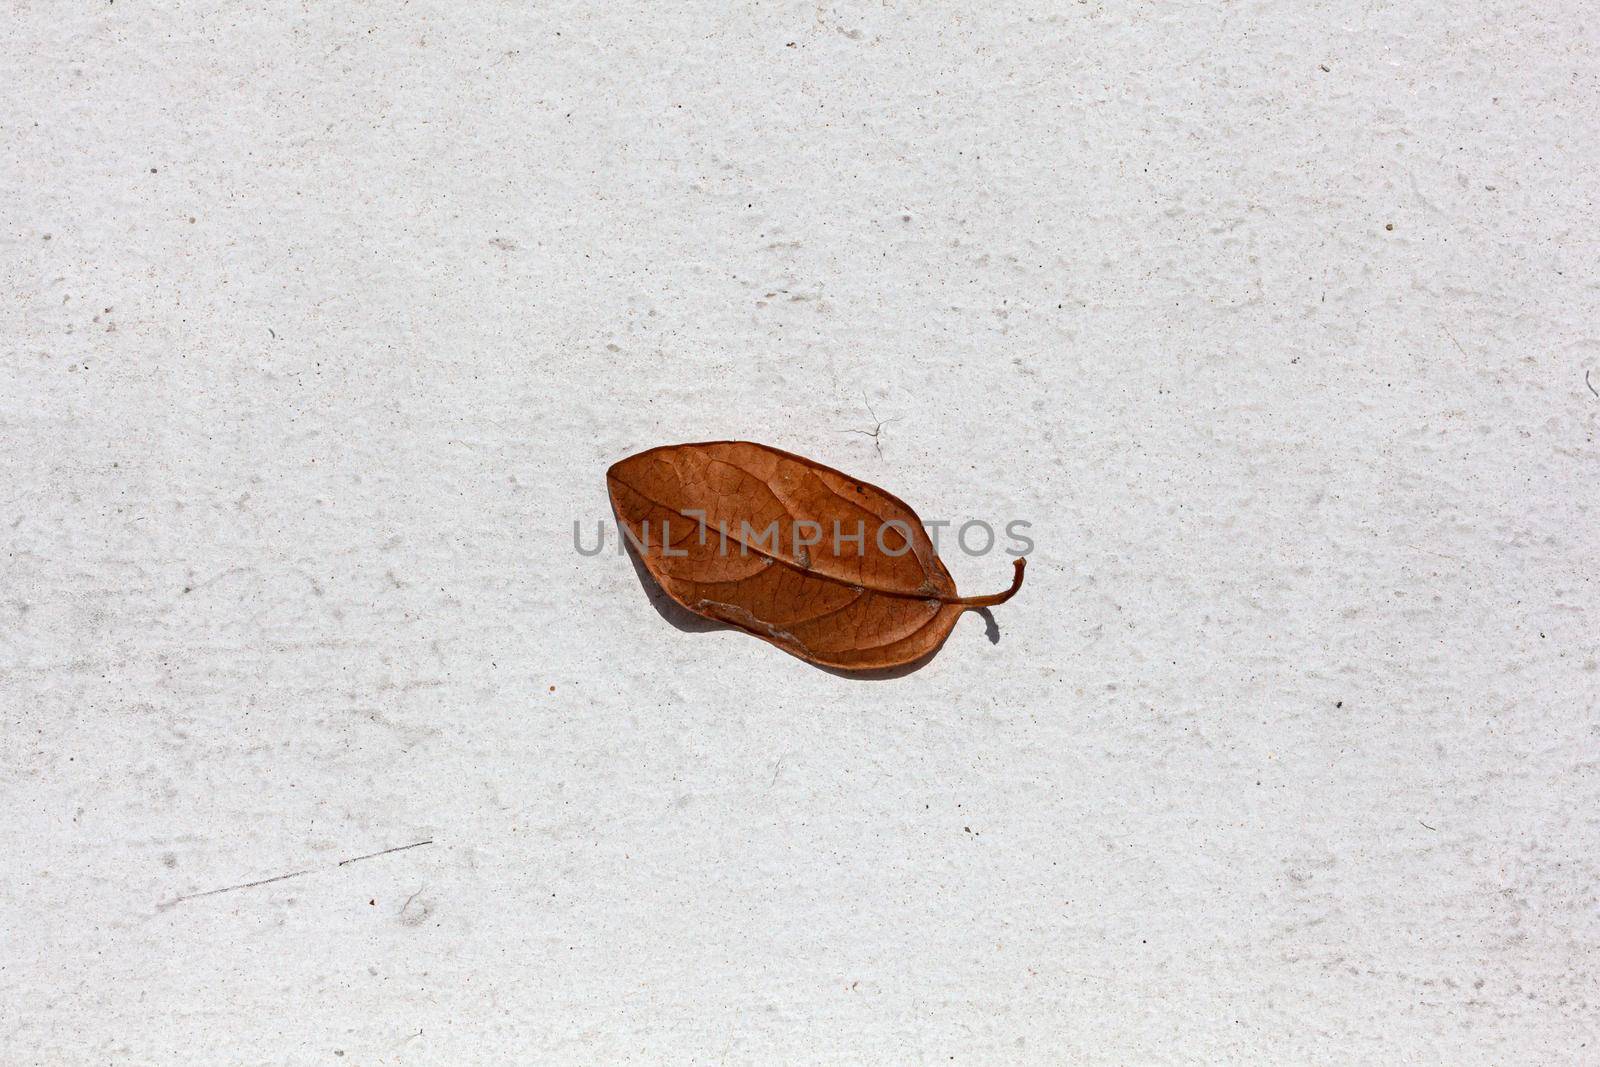 Dried leaf on concrete floor by bepsimage